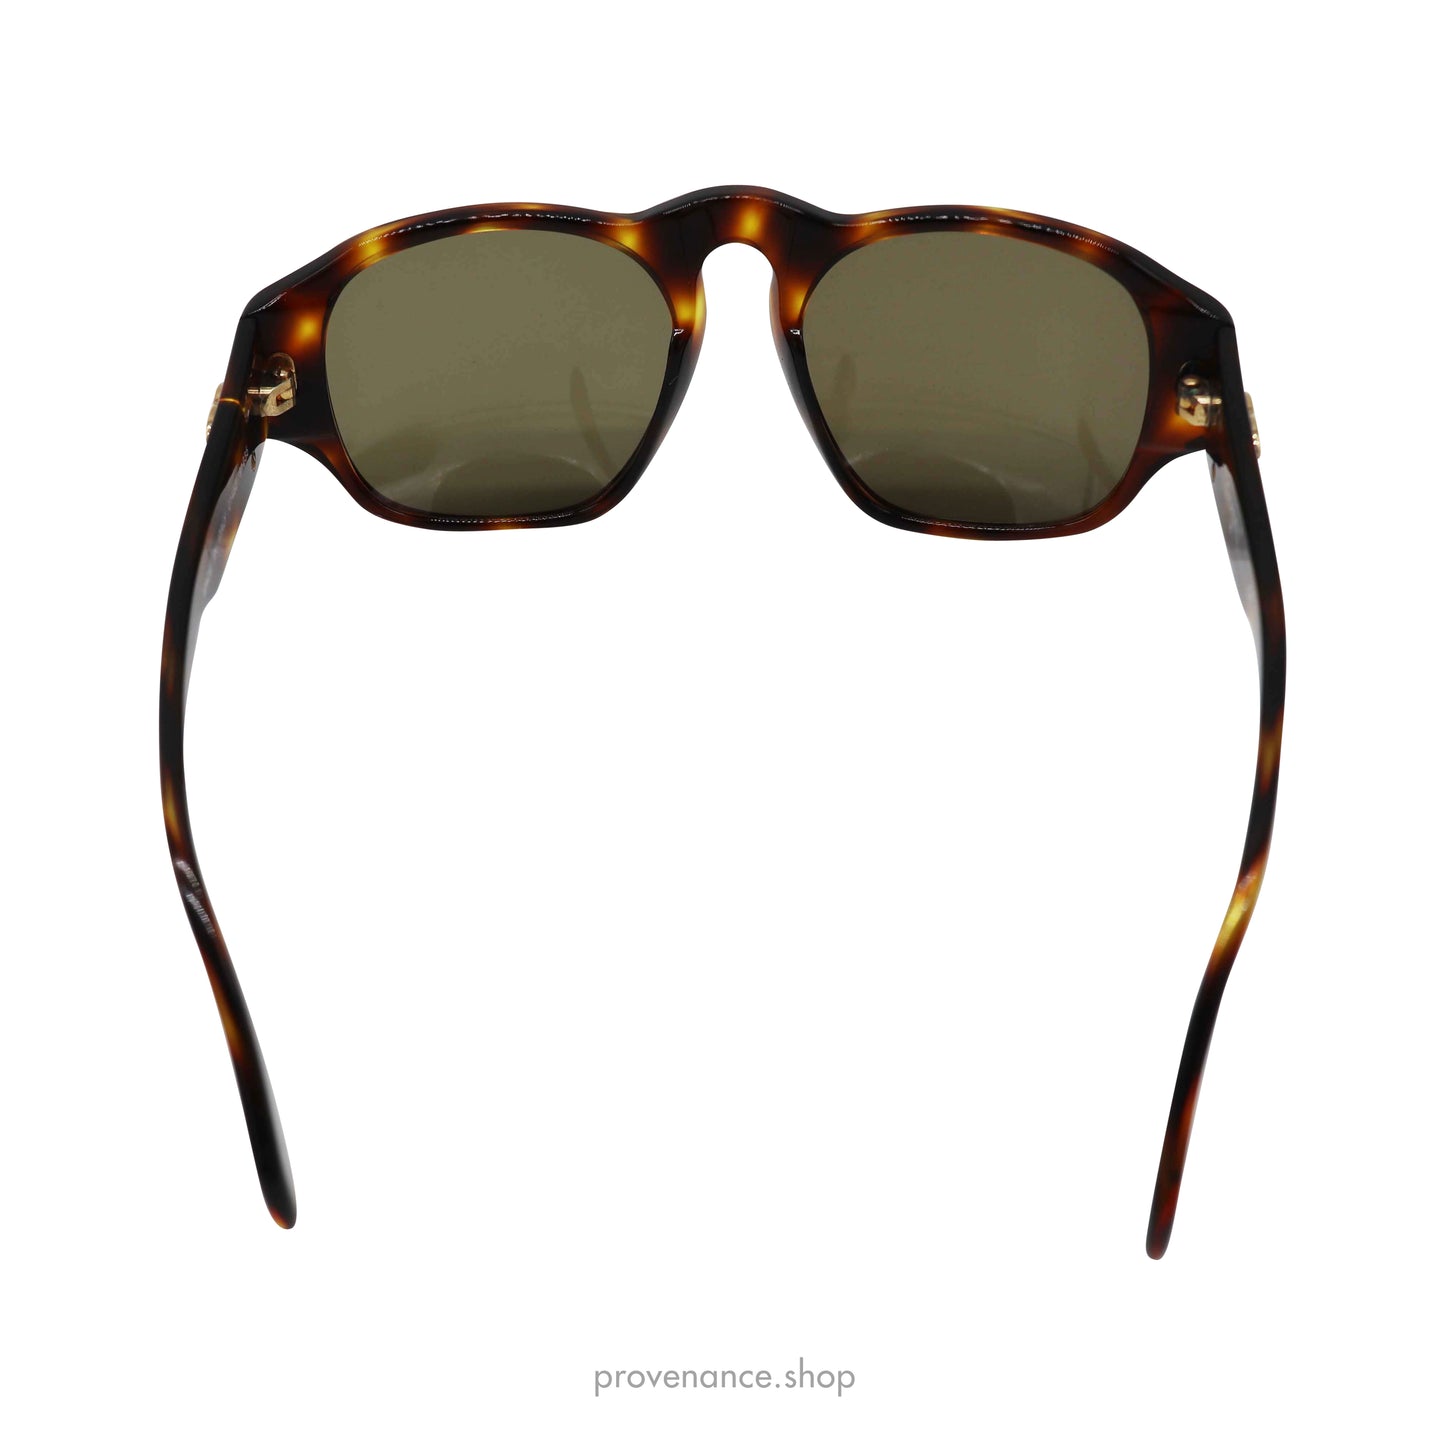 Chanel Double CC Sunglasses - Brown Tortoise - 01452